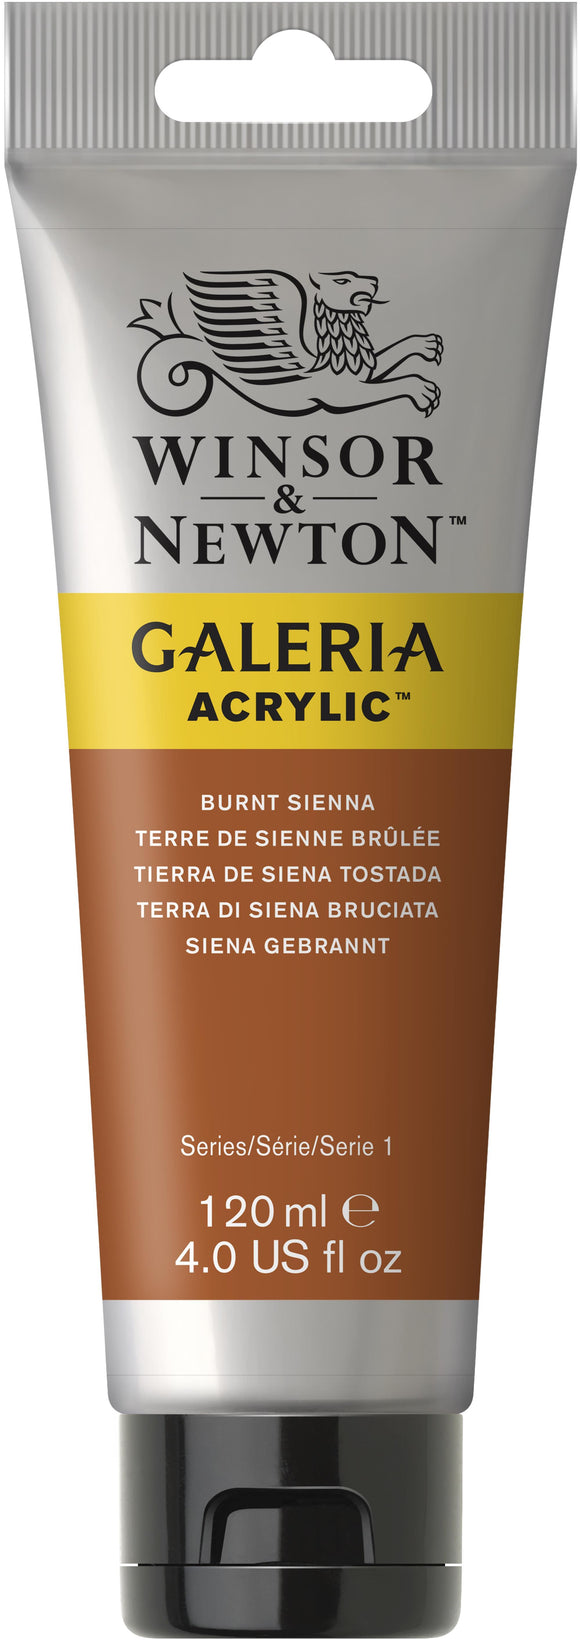 Winsor & Newton Galeria Acrylic Burnt Sienna 120Ml